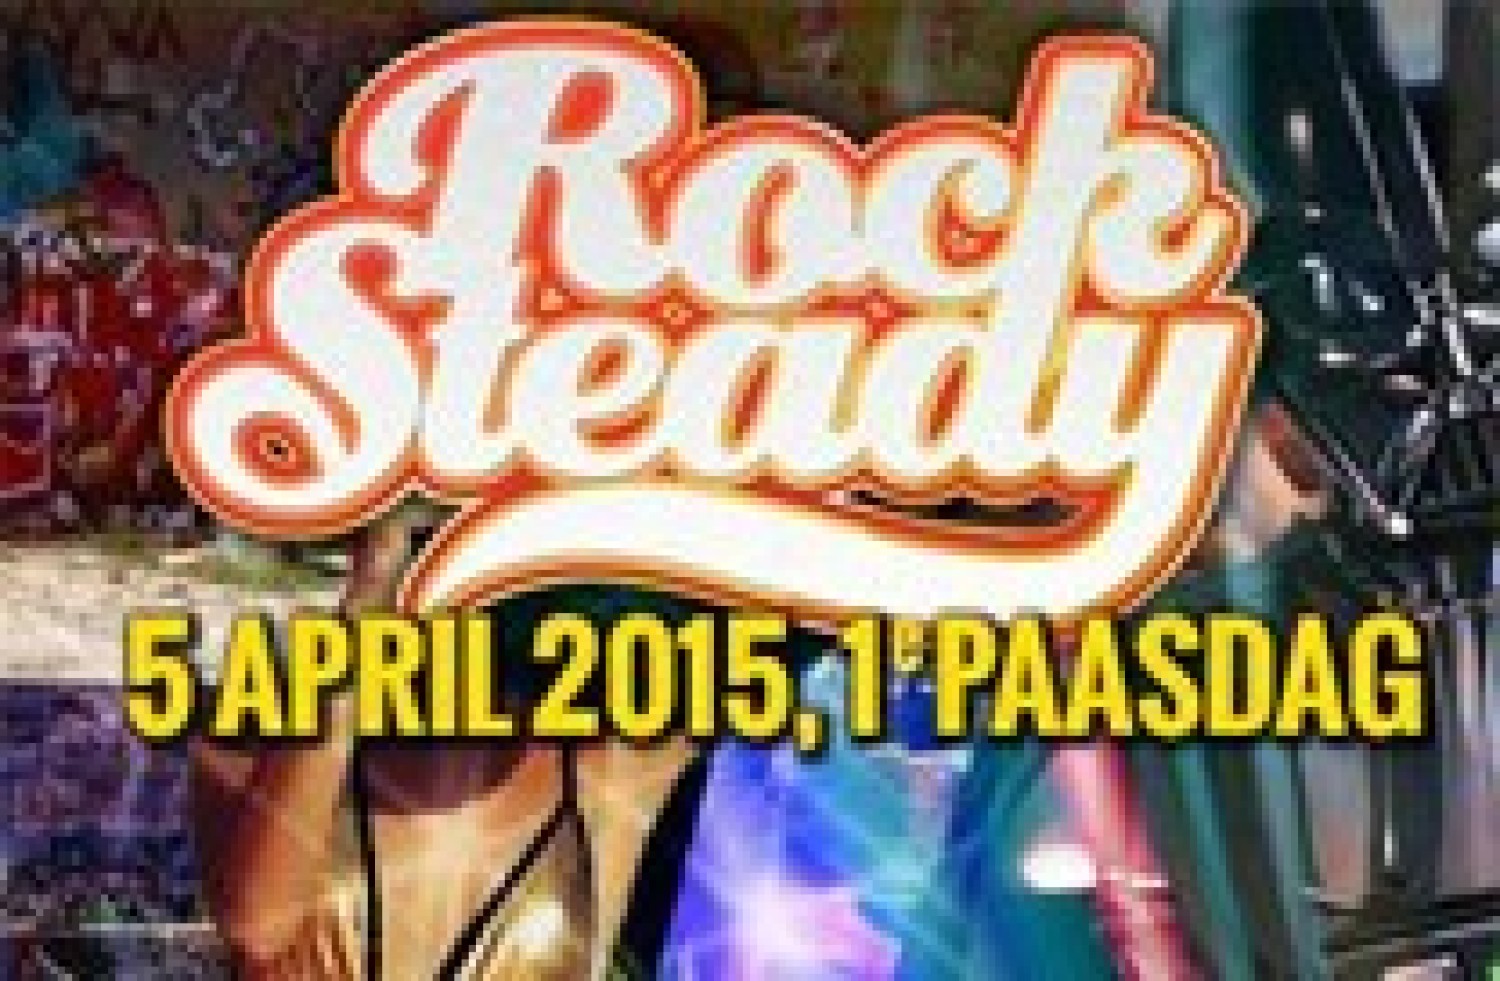 Party nieuws: Rocksteady op zondag 5 april in Beachclub Vroeger